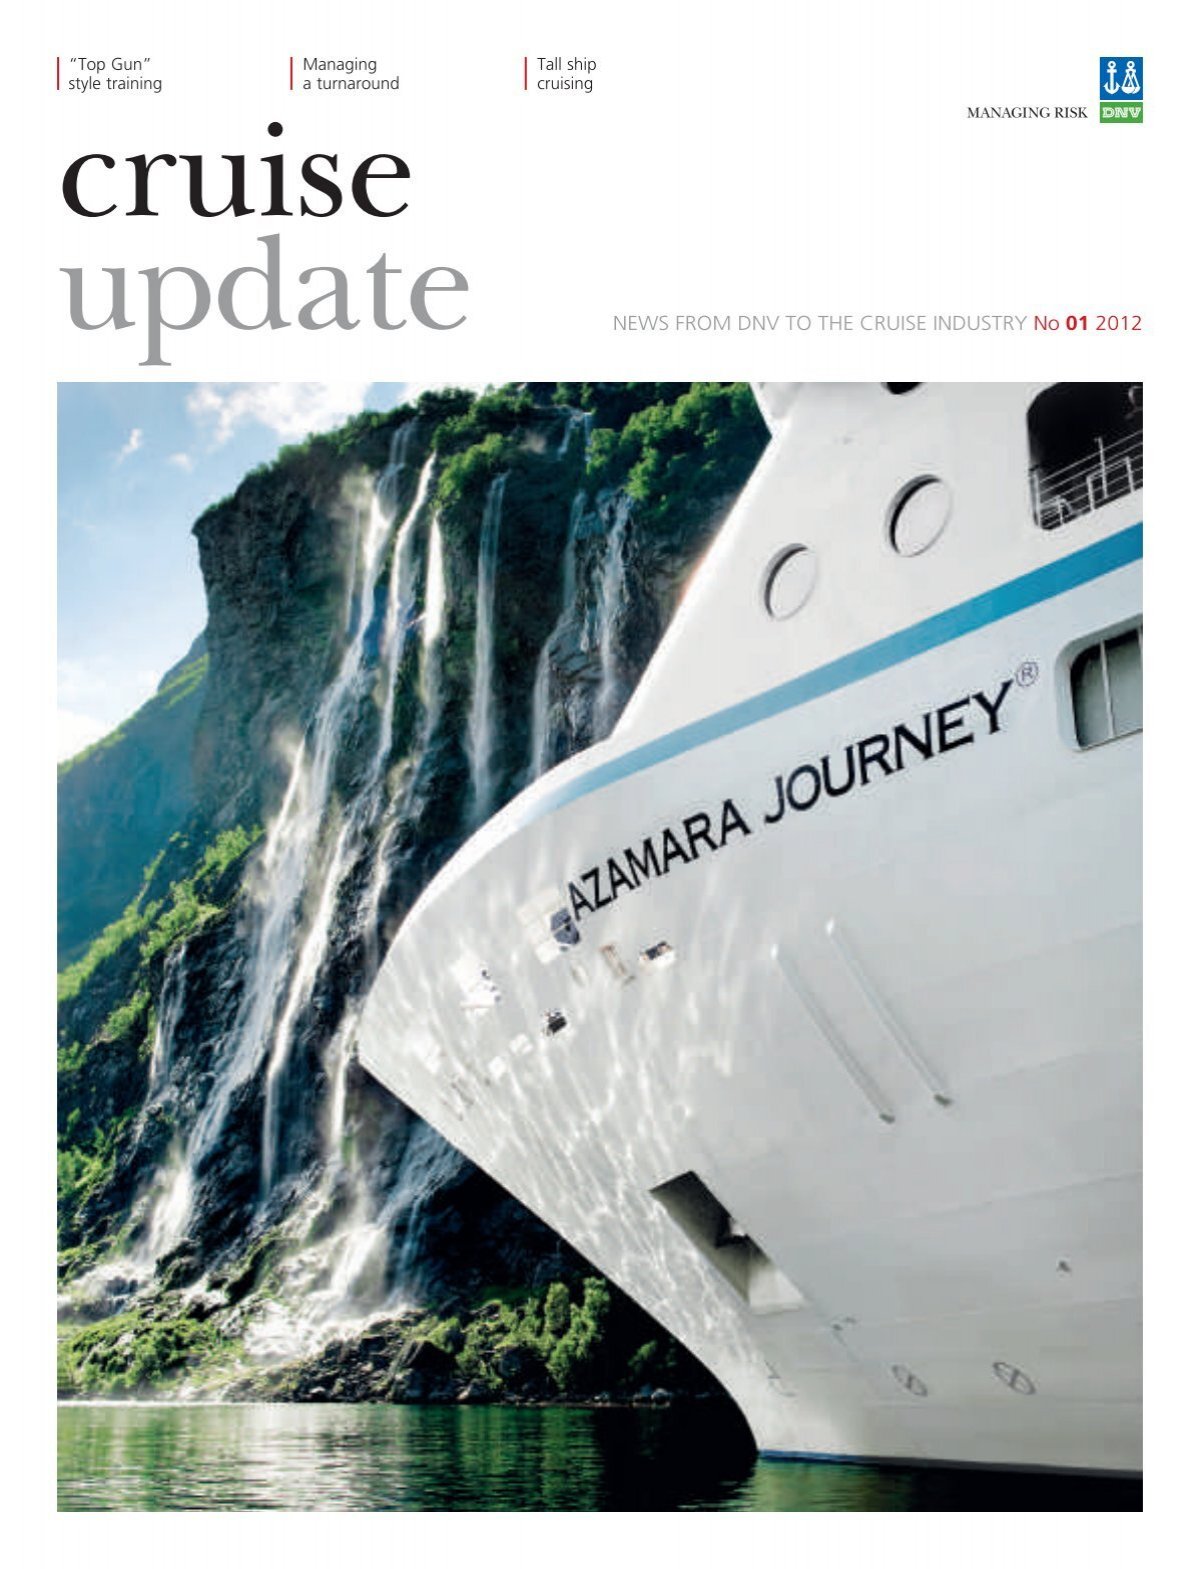 Polar Quest Expanding Arctic Program - Cruise Industry News